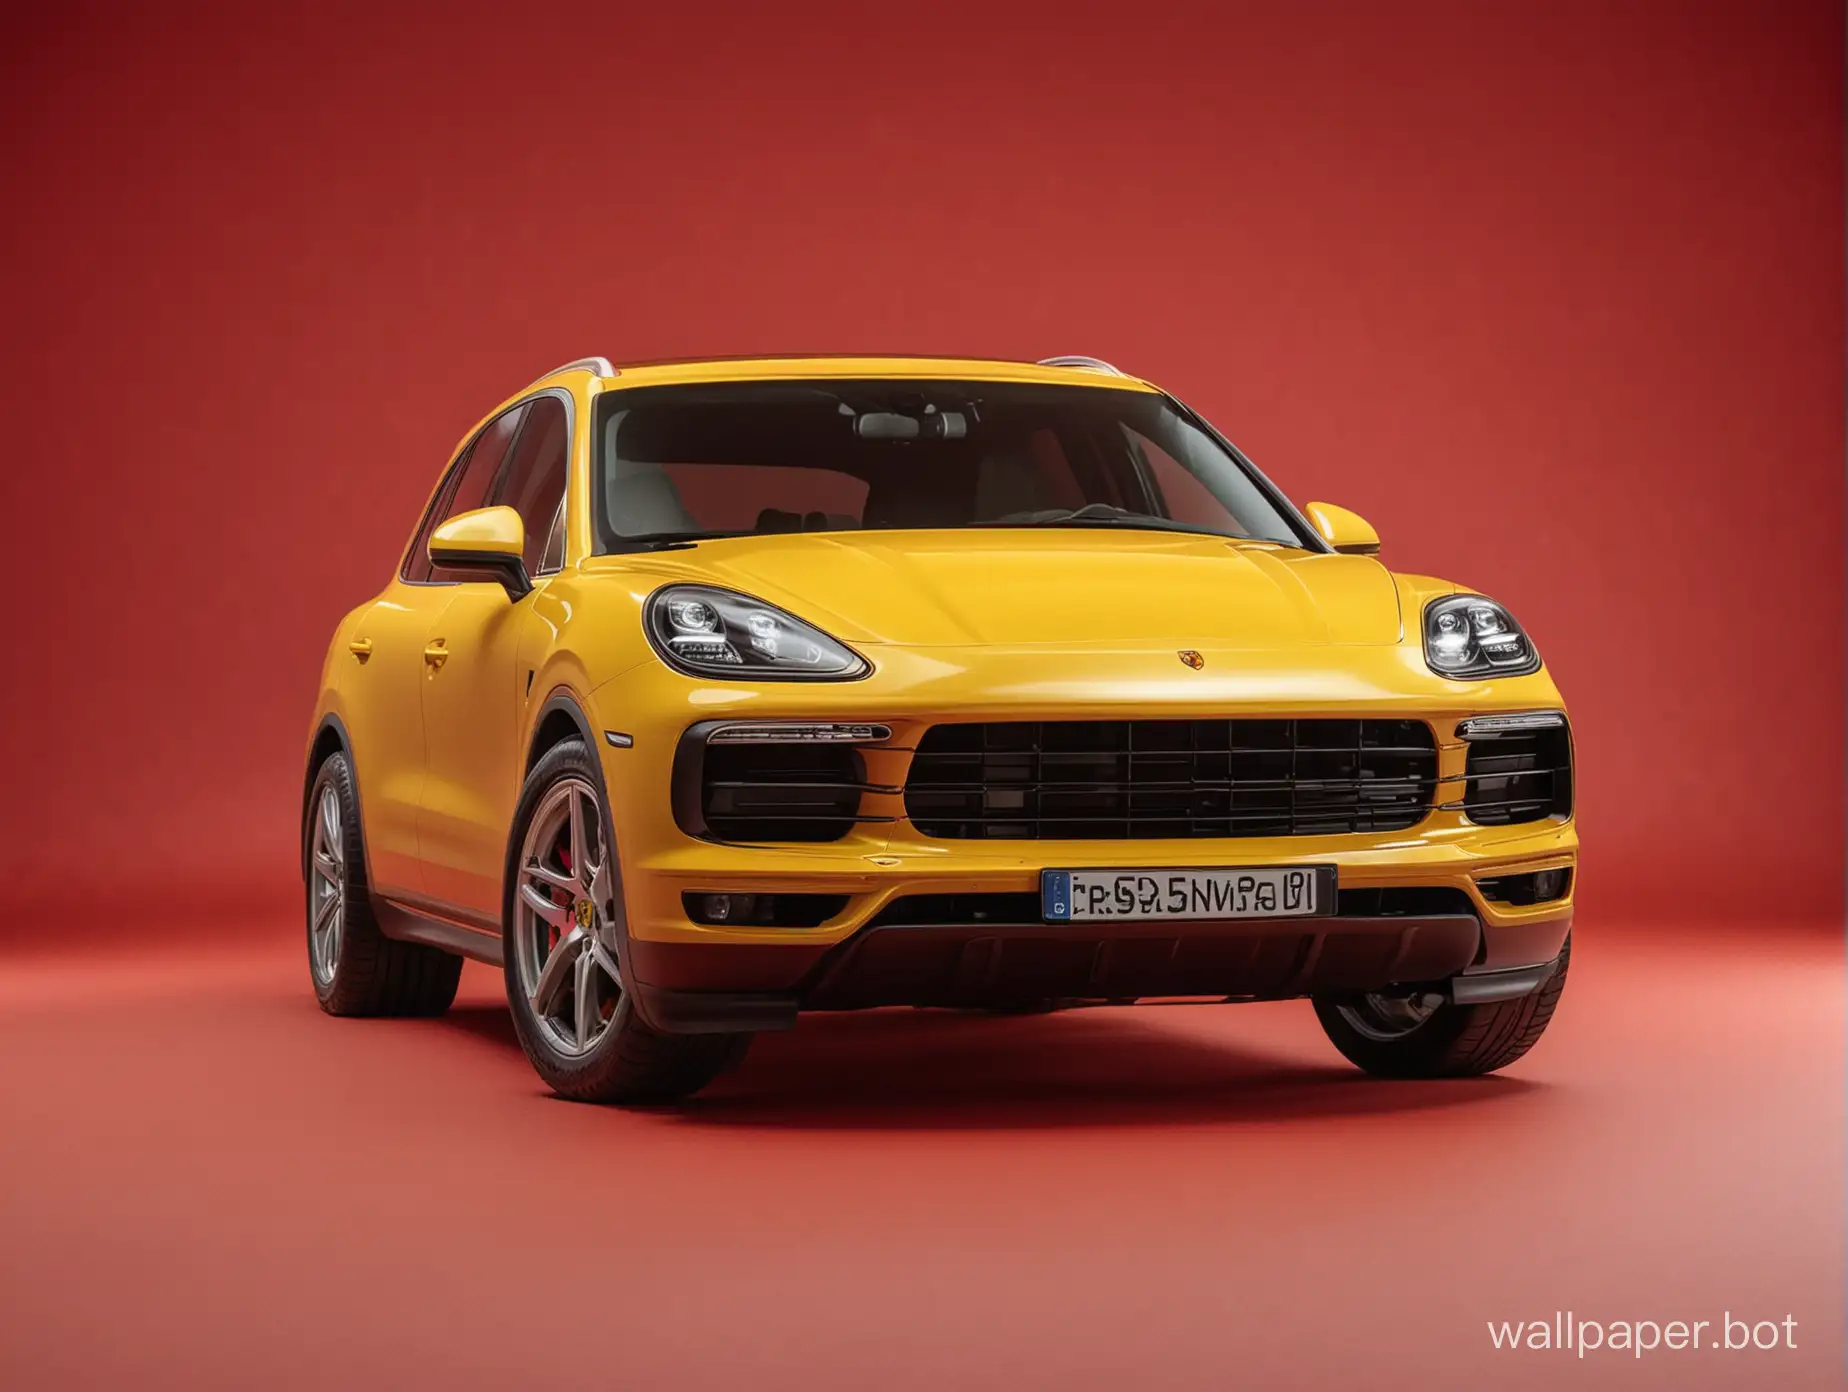 Stunning-Yellow-Porsche-Cayenne-Showcased-on-Vibrant-Red-Background